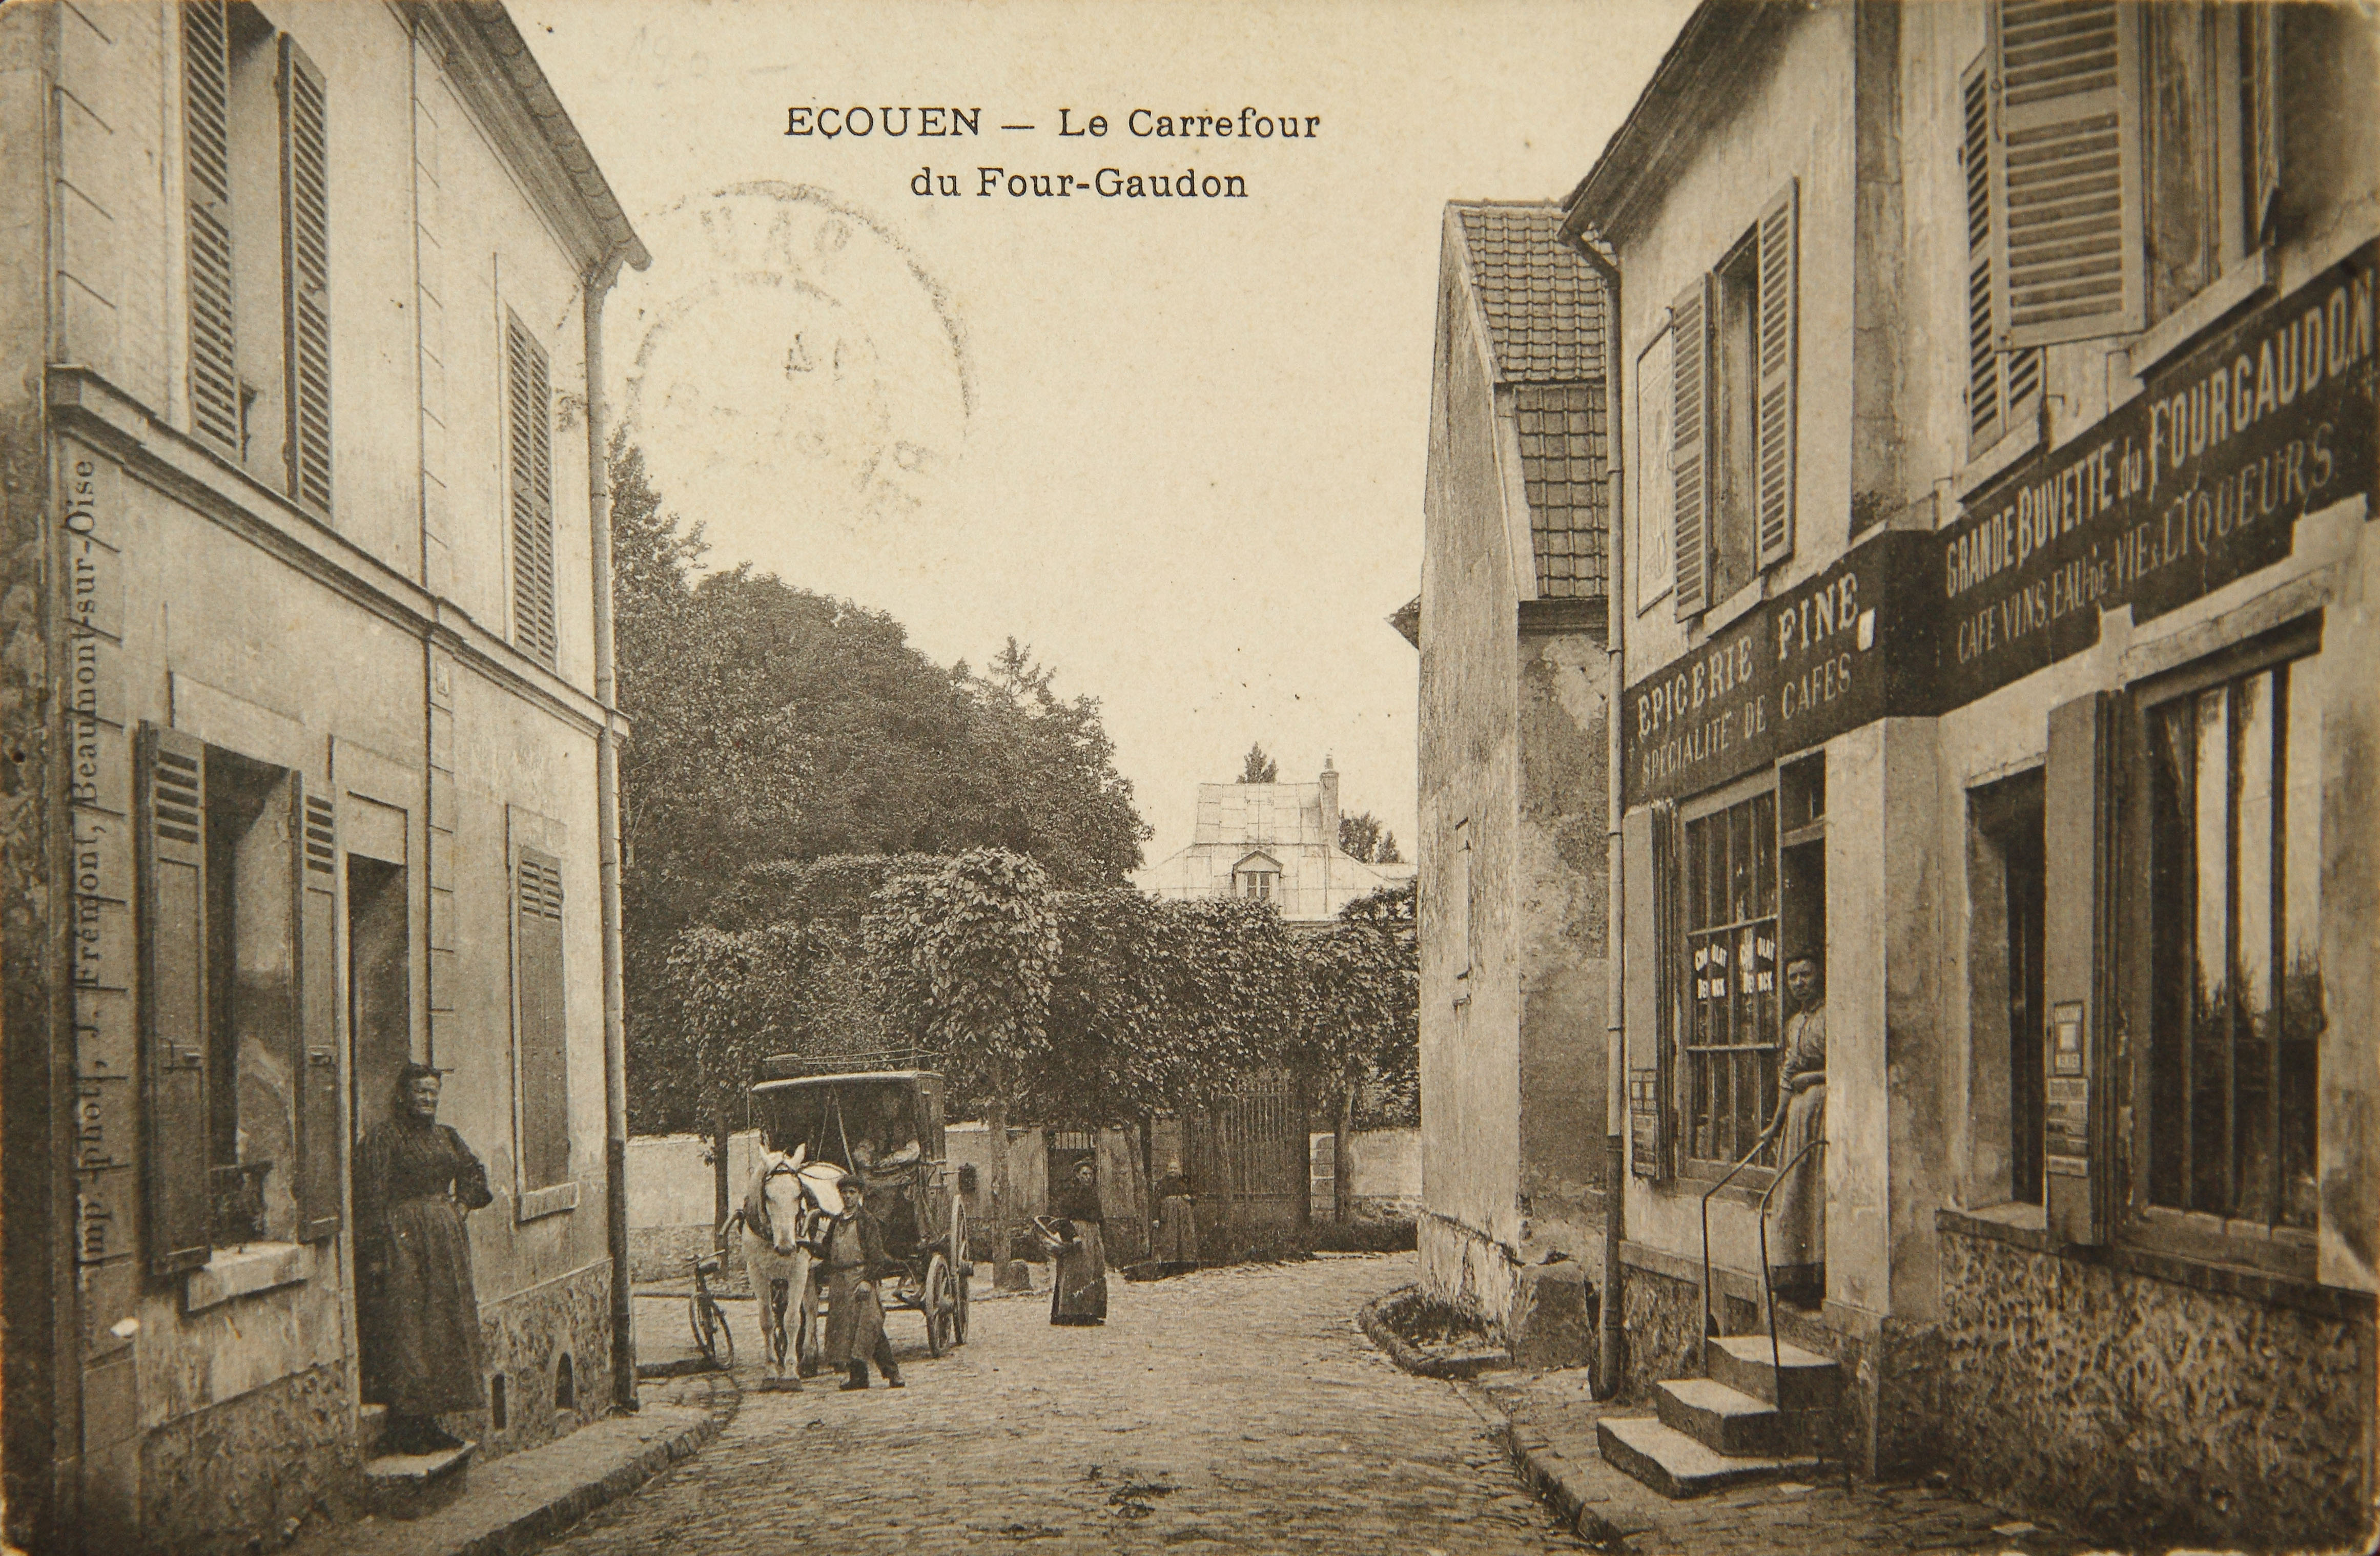  Ecouen's district when Baron lived